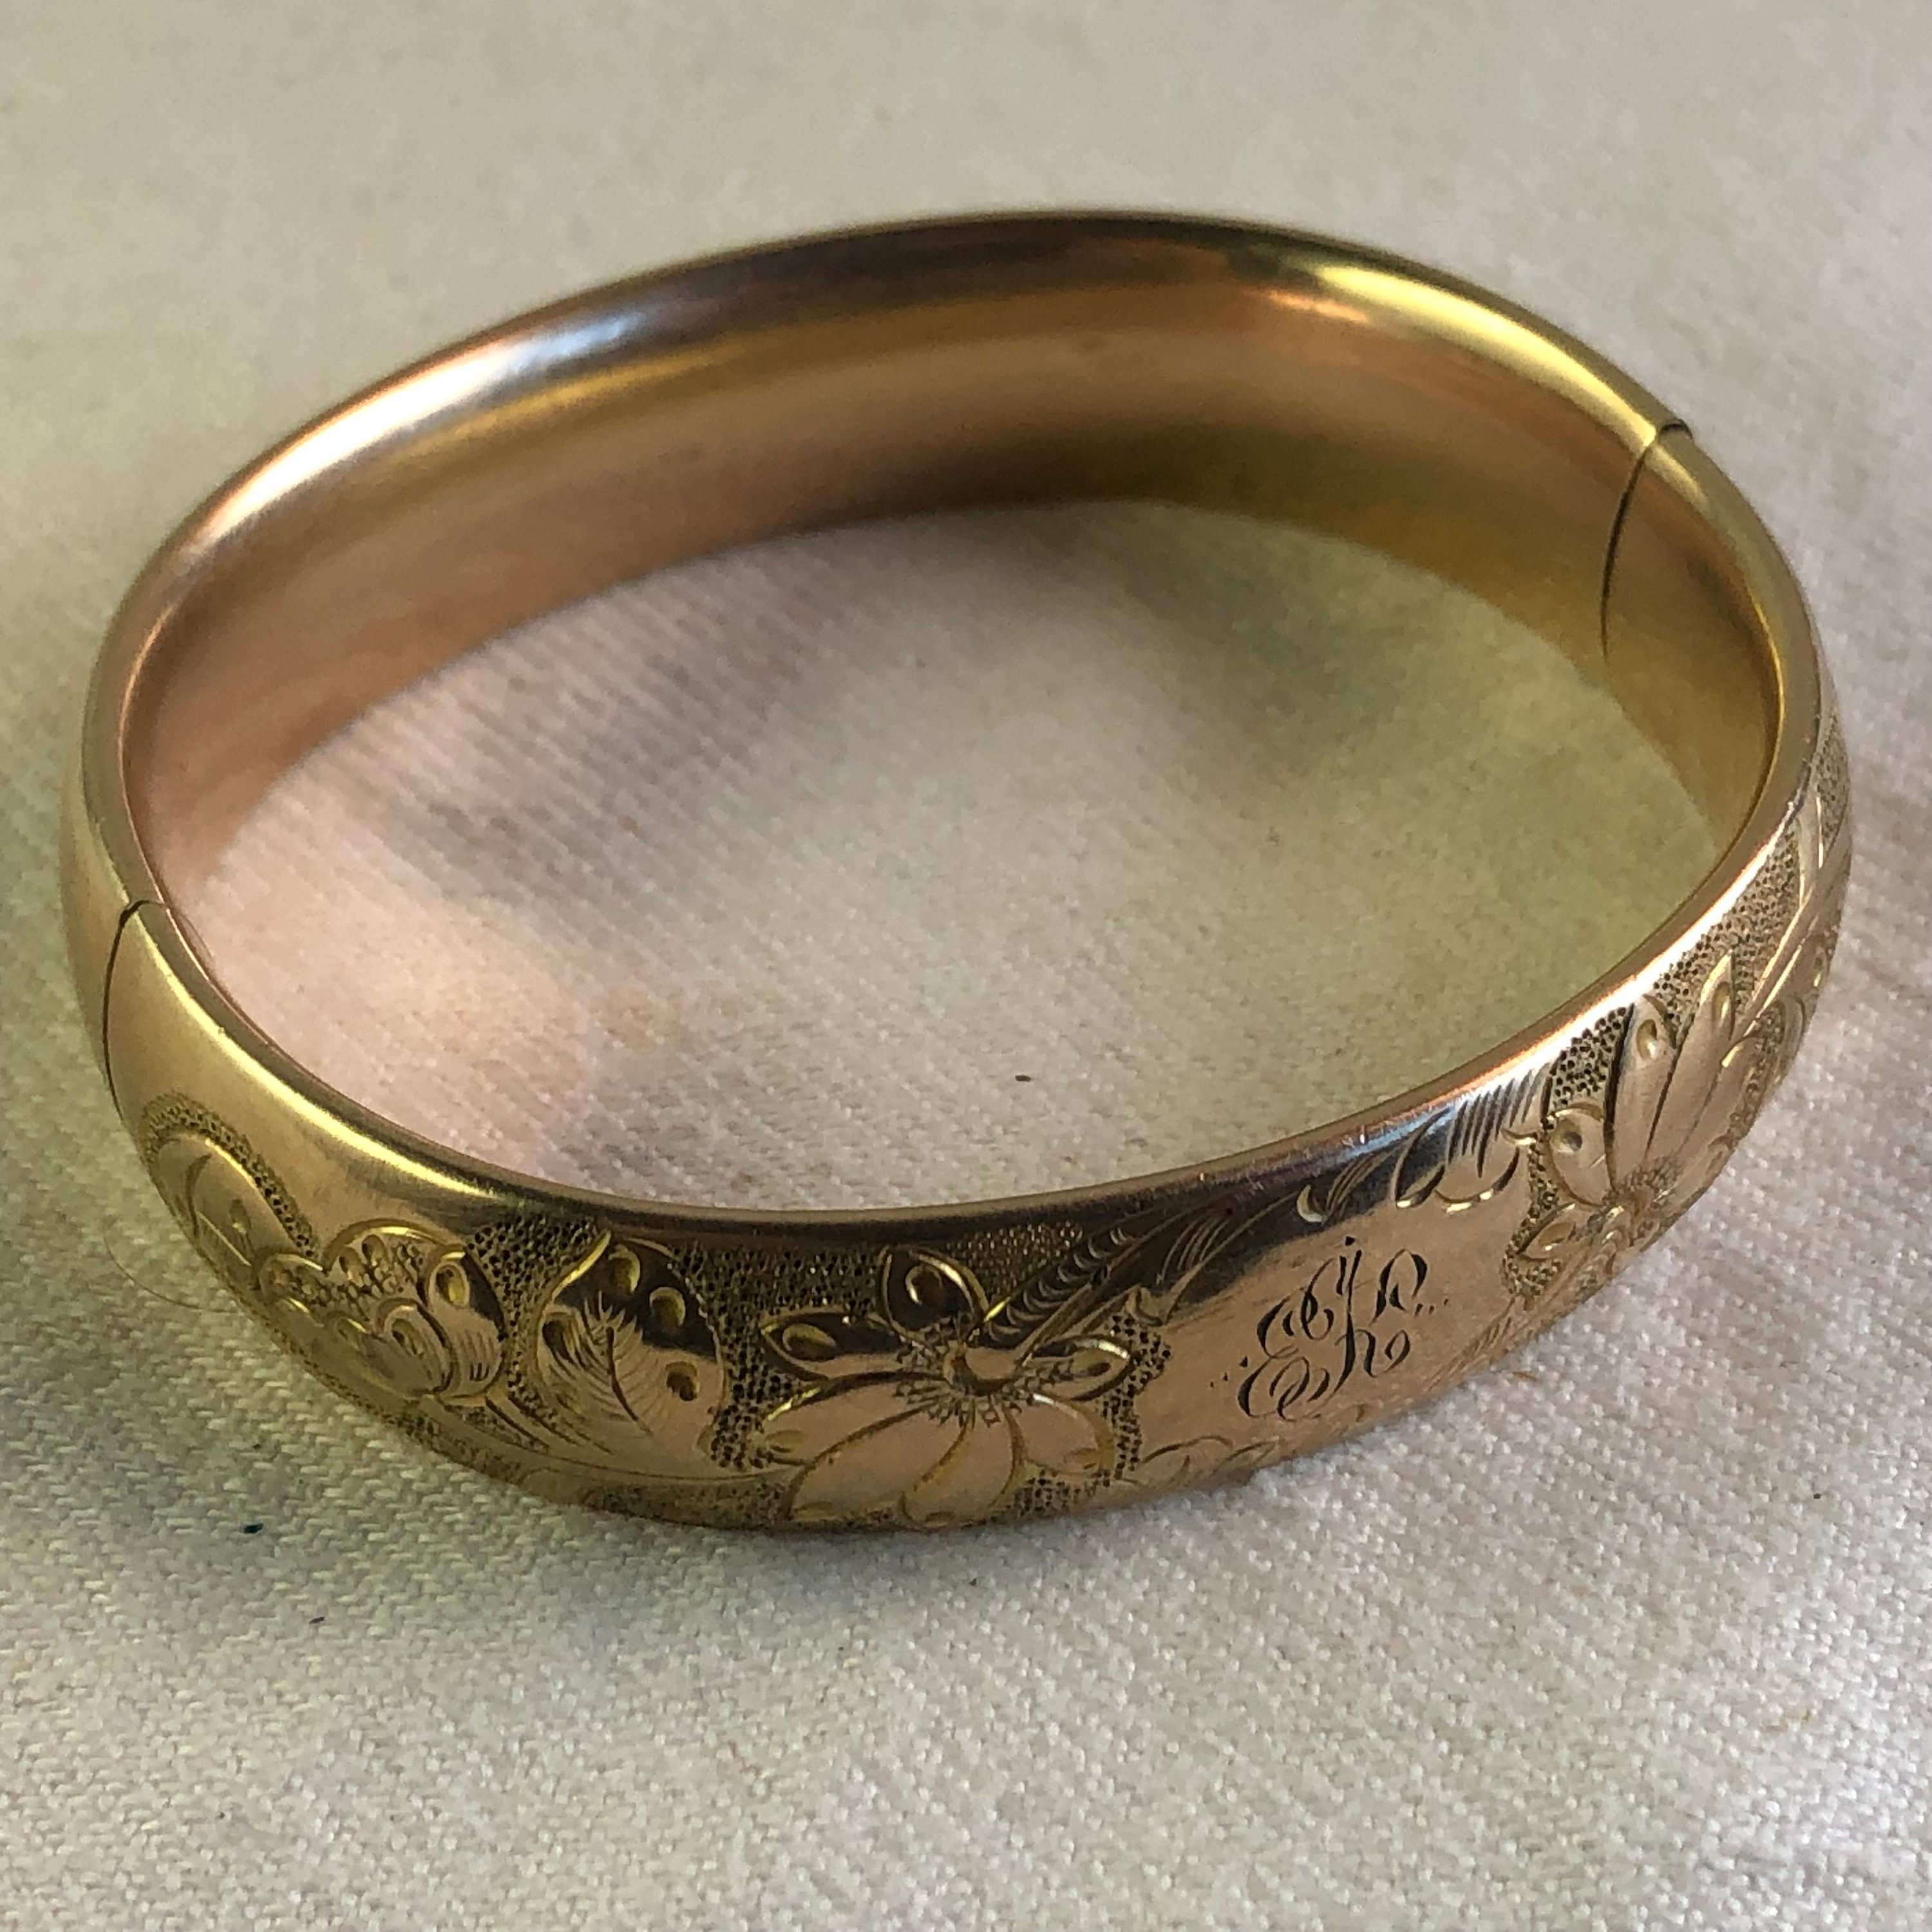 18 Chai bracelet - Good Luck Bracelet - Symbolic Bracelet - 14k Gold Filled Bracelet - Handmade Jewelry